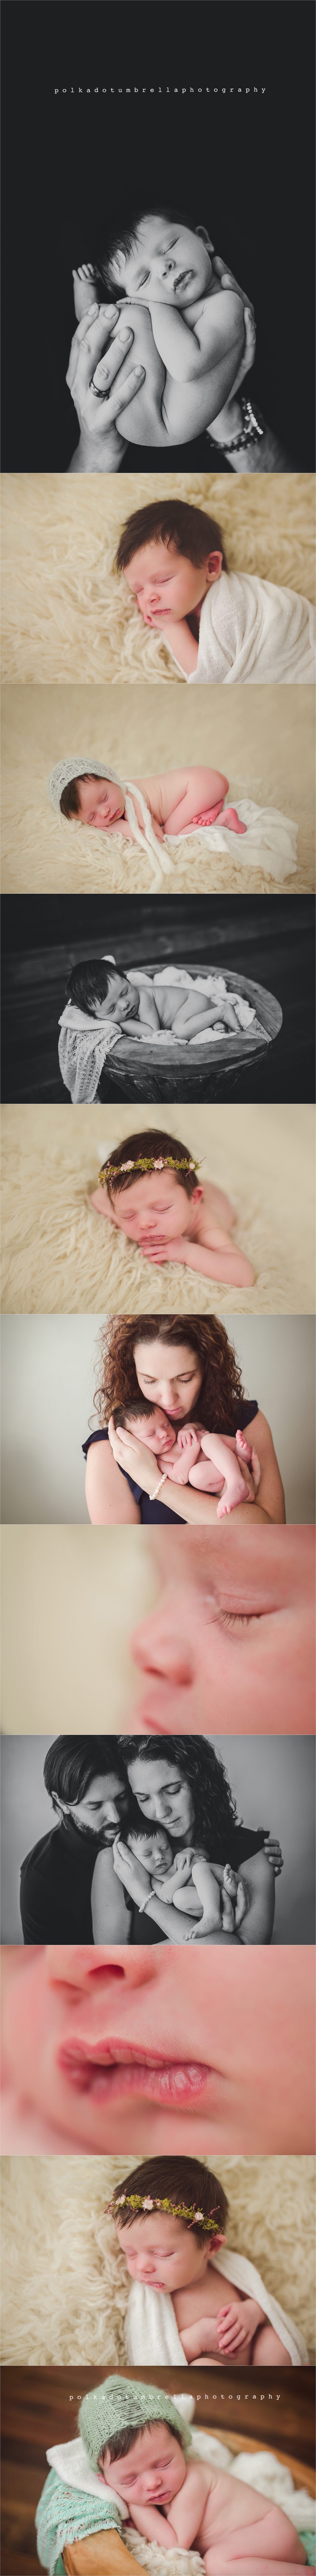 Appleton WI Newborn Photographer | Polka Dot Umbrella Photography | www.polkadotumbrella.com